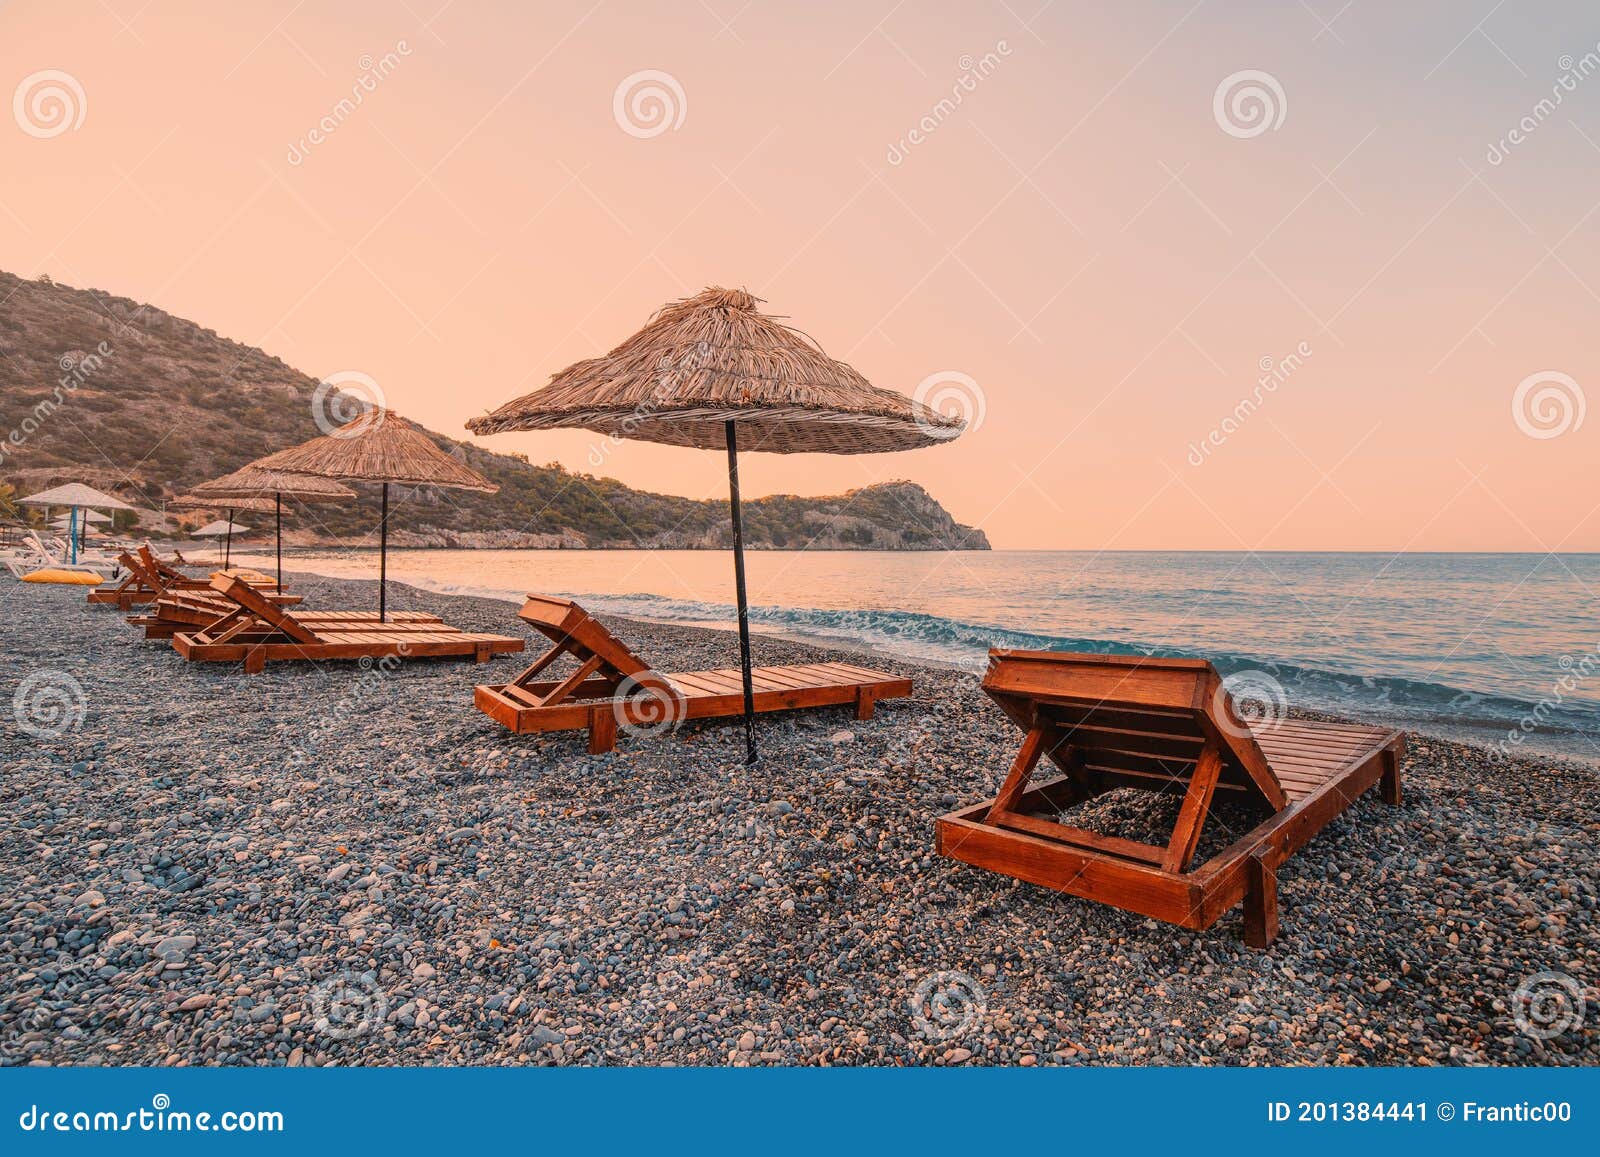 sunbeds and sun umbrellas await vacationers on the shingle beach at ovabuku beach on the datca peninsula in turkey.